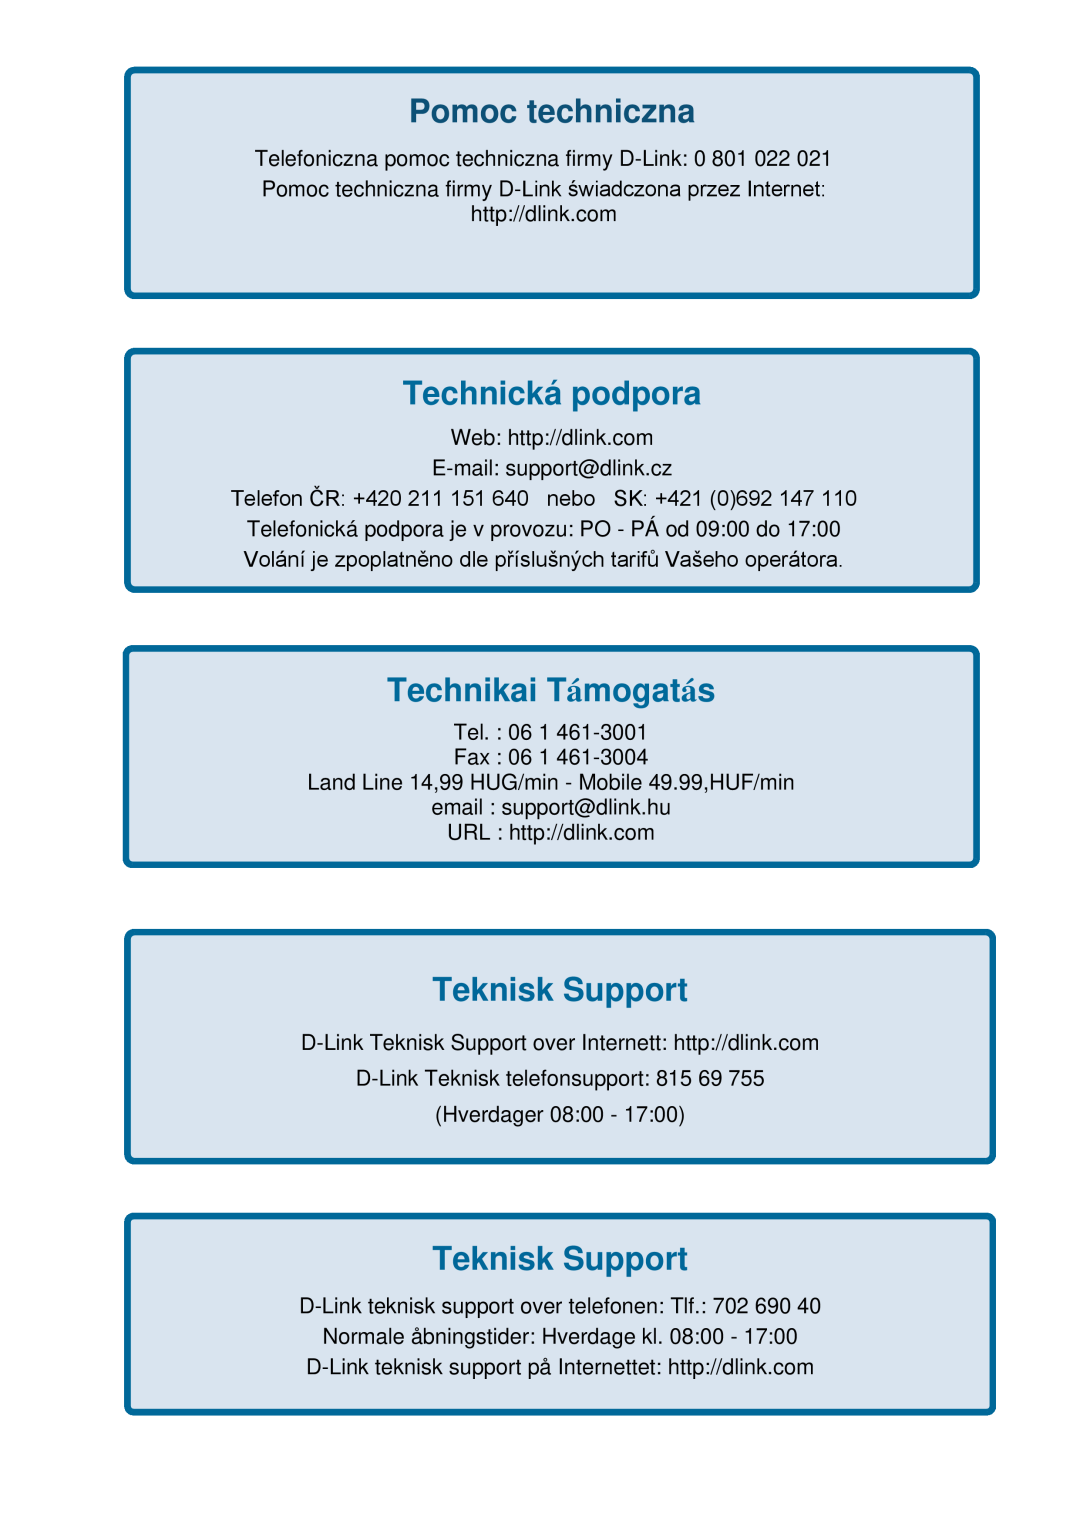 D-Link ethernet managed switch manual Technická podpora, Technikai Támogatás, Teknisk Support, Pomoc techniczna 